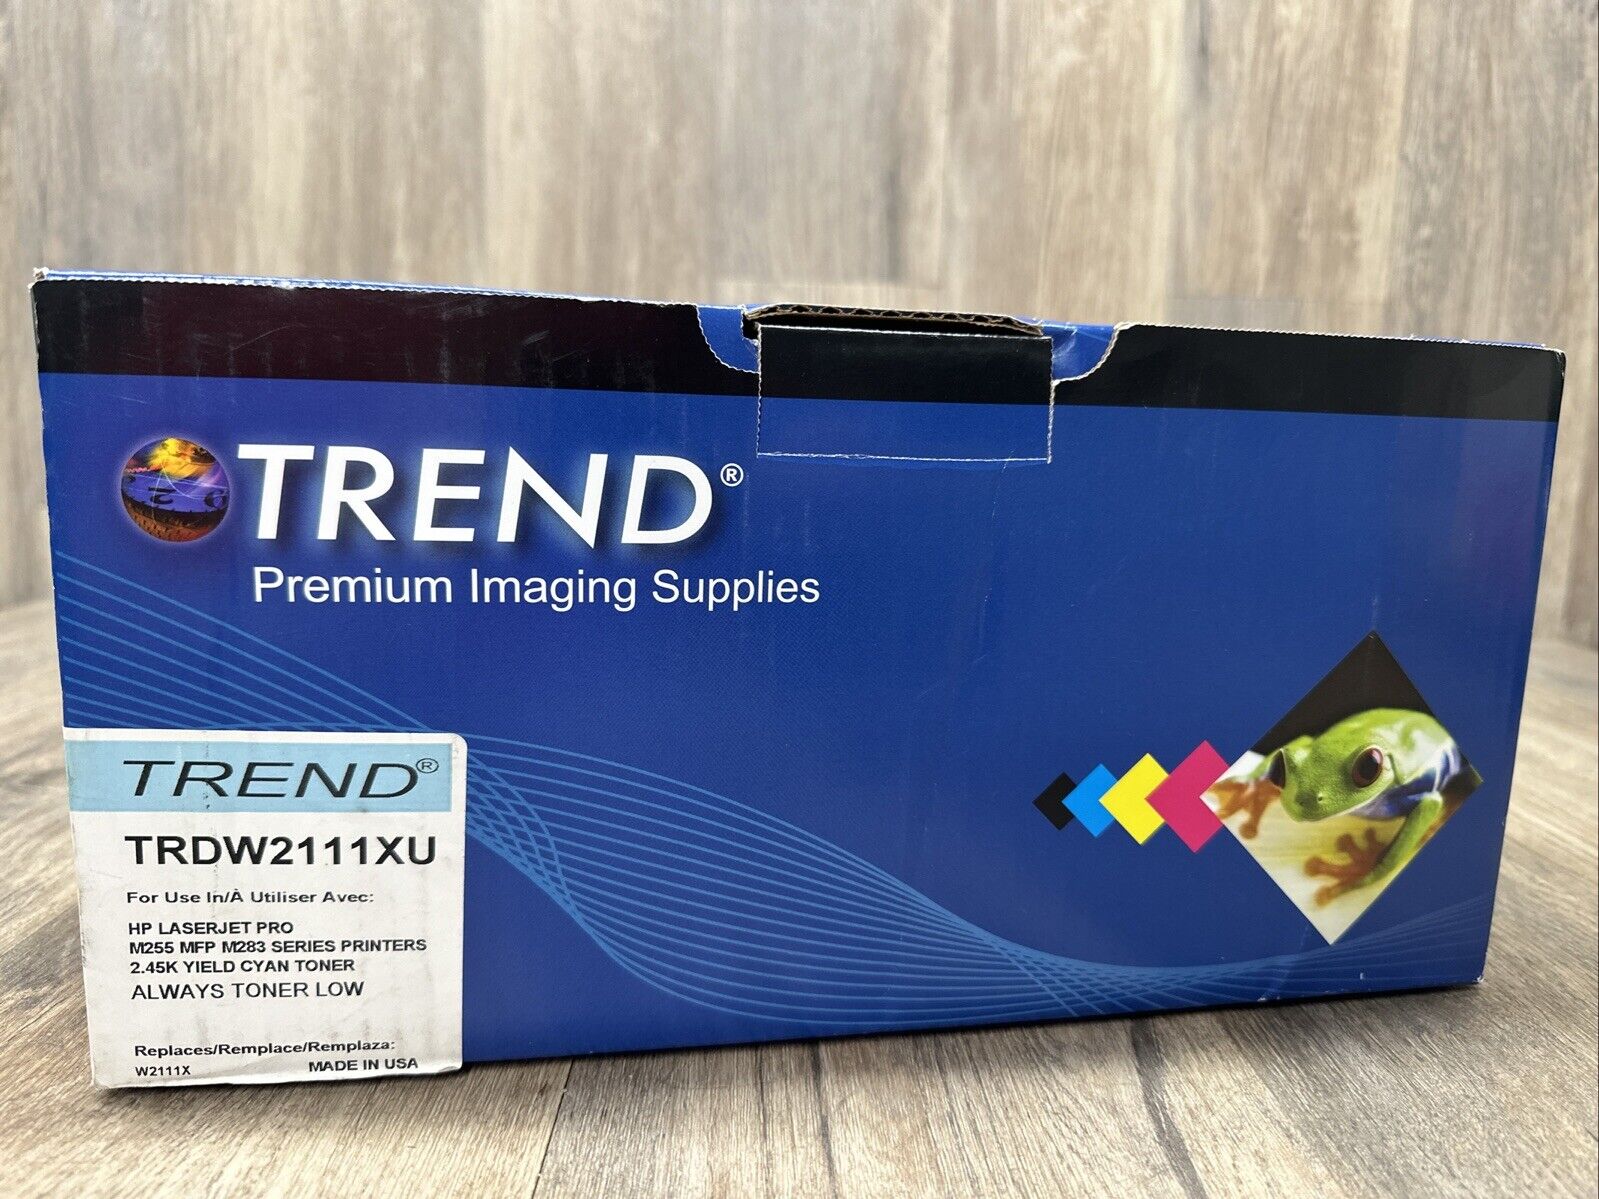 Trend Premium Imaging Supplies HP Laserjet Pro 2.45 Yield Cyan Toner